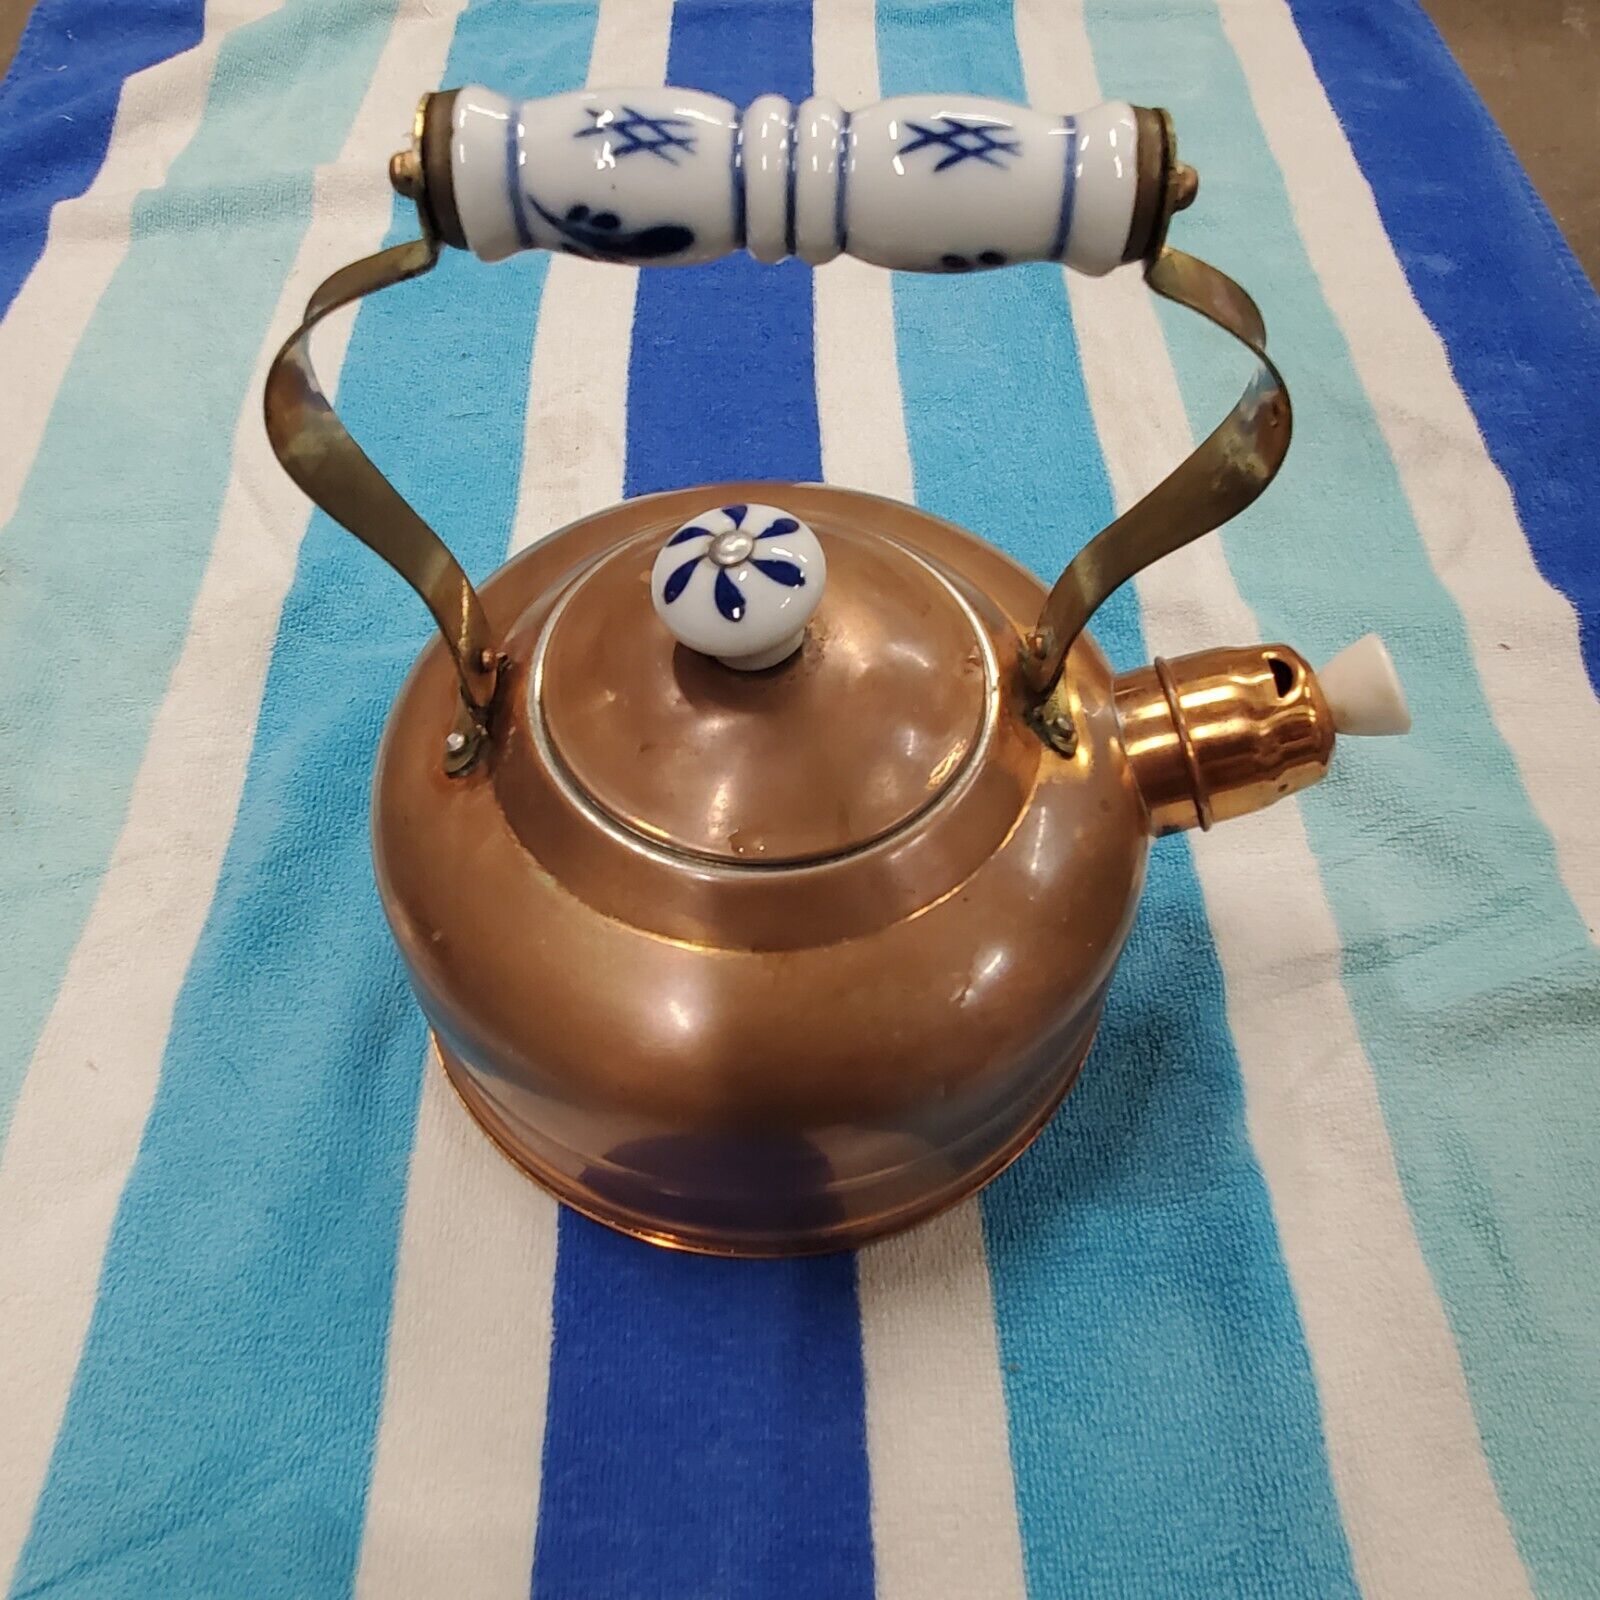 Vintage Copper Whistling Tea Pot Kettle - Delft Blue & White Porcelain Handles